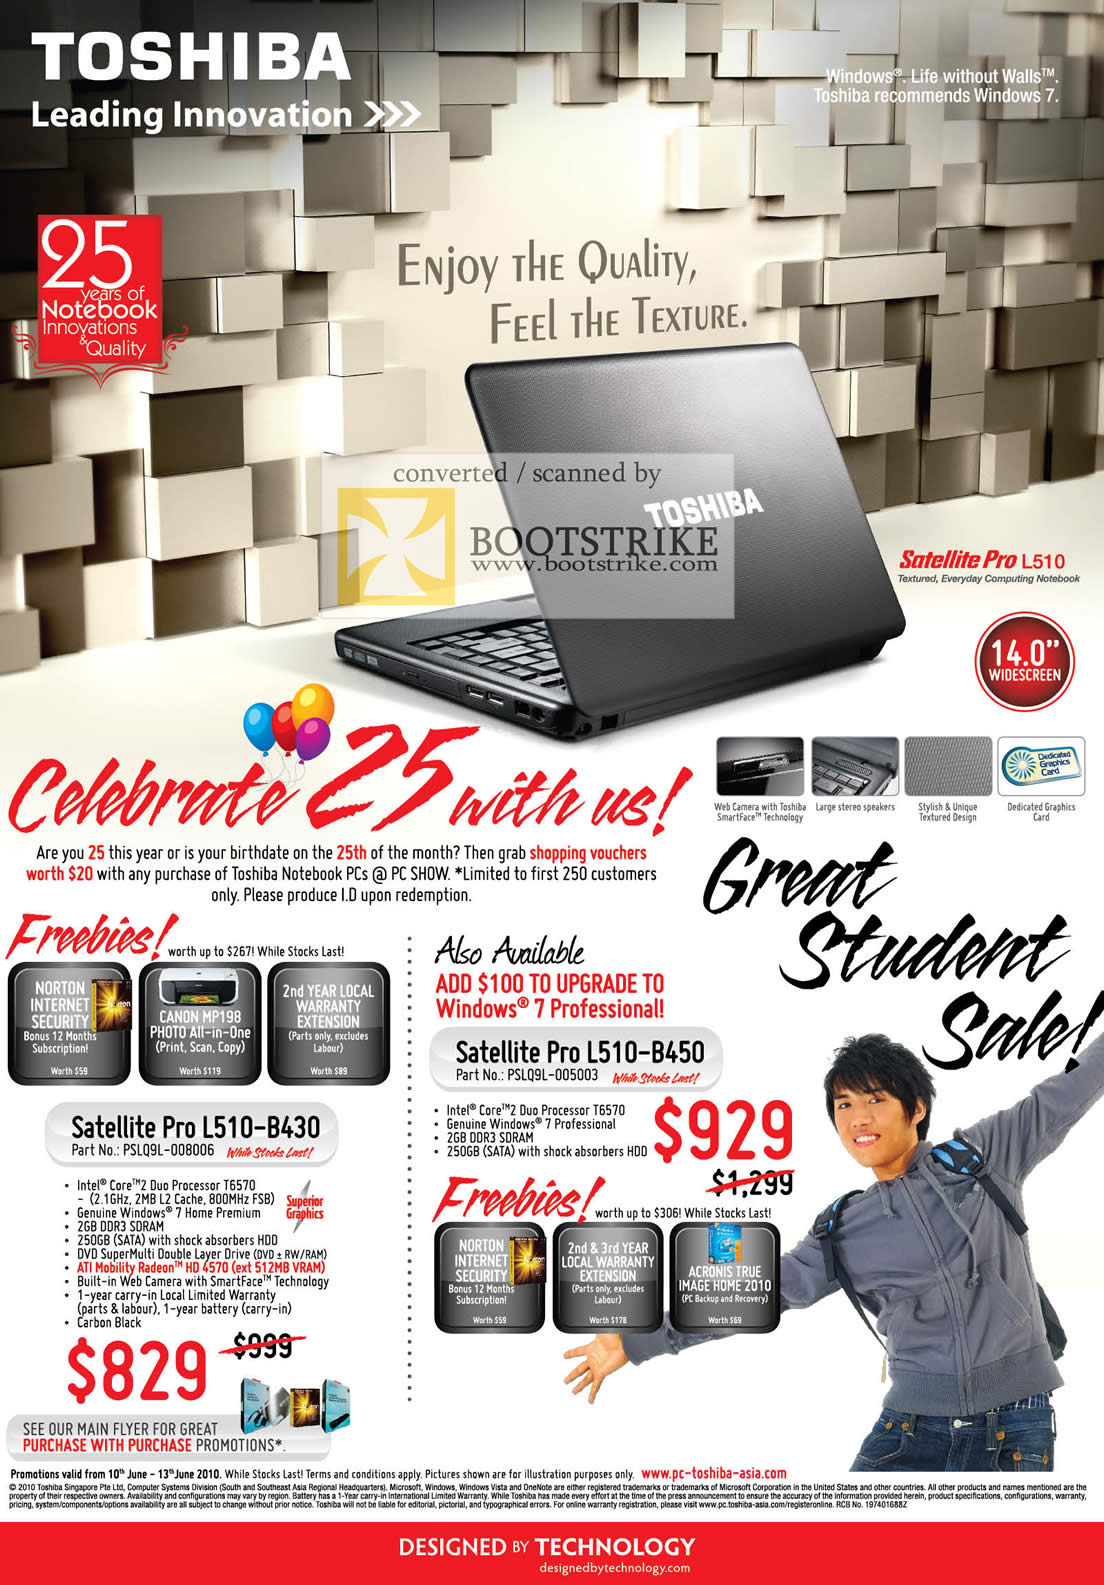 PC Show 2010 price list image brochure of Toshiba Notebook Satellite Pro L510 B430 B450